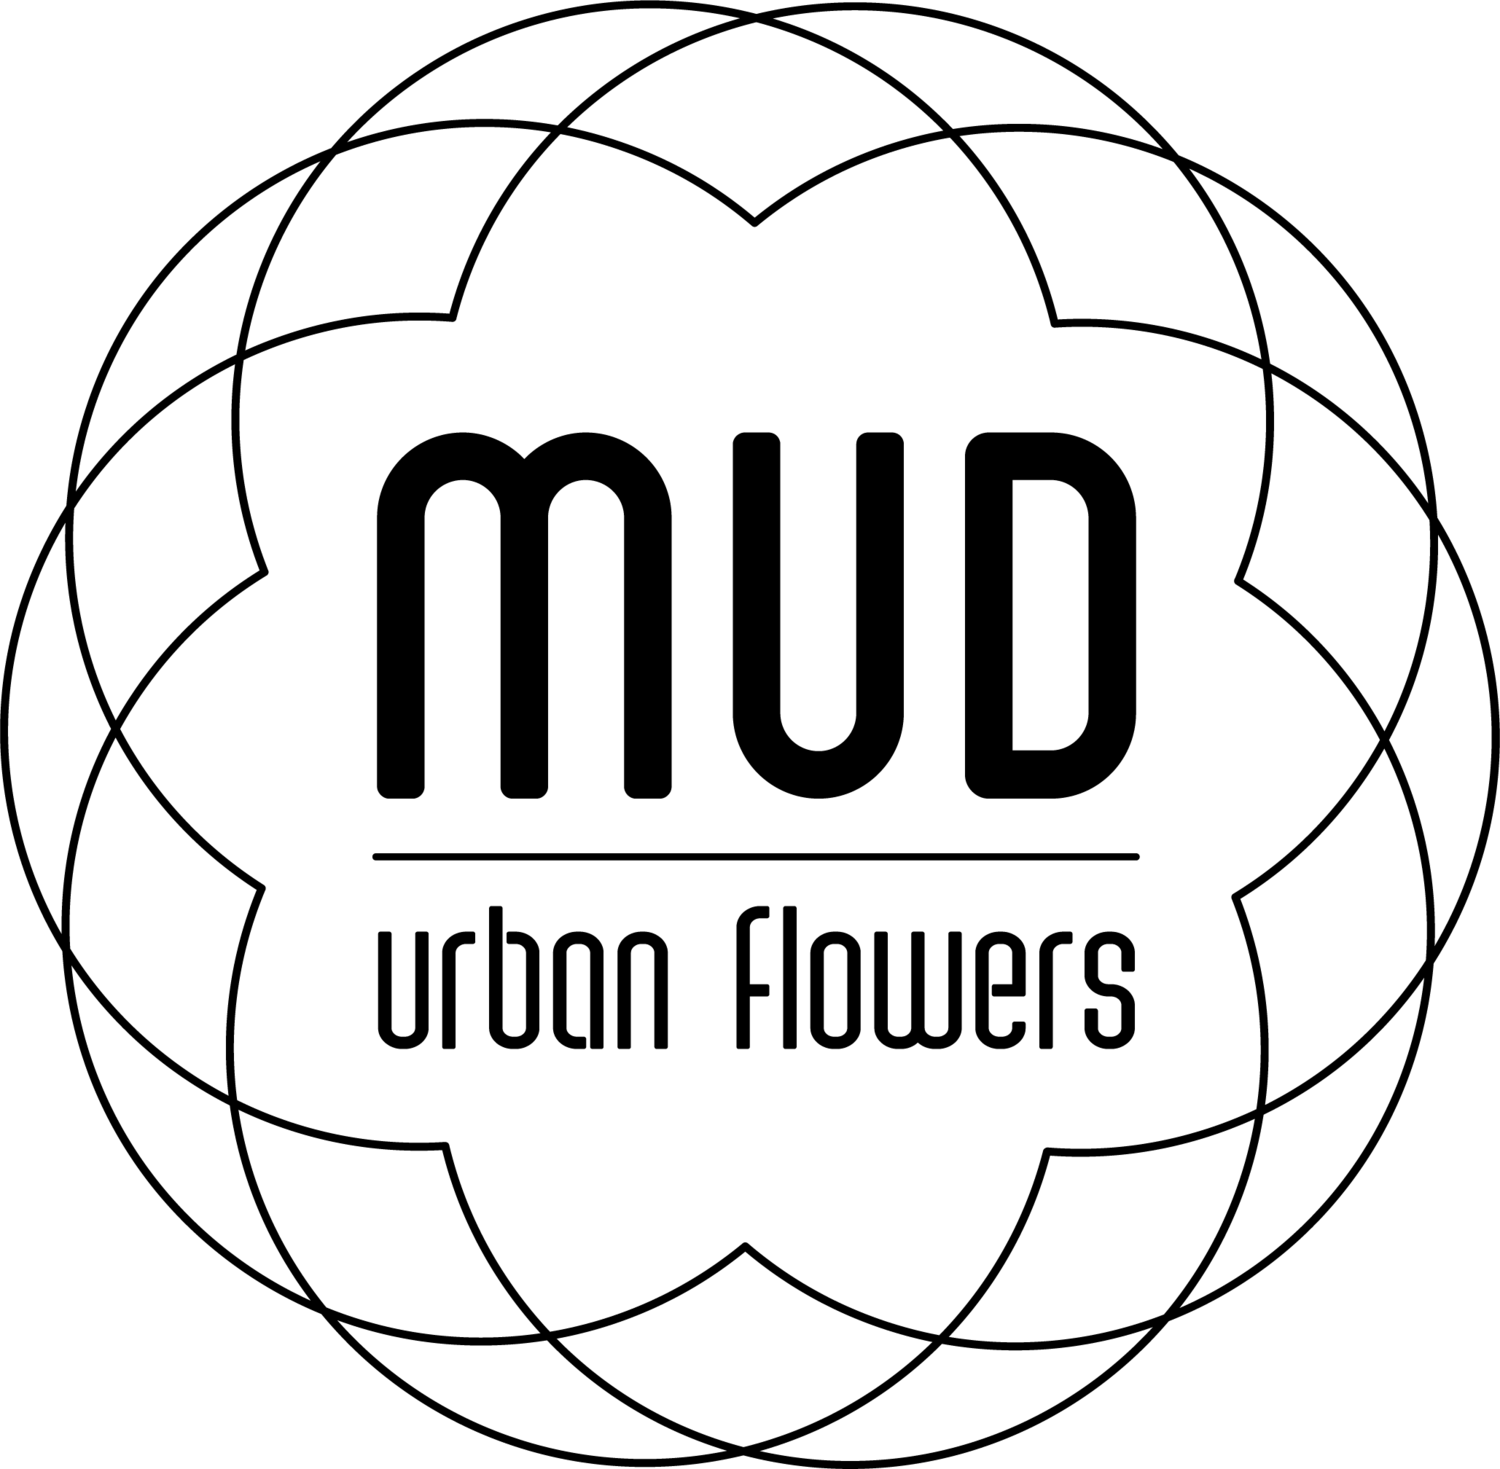 Flowers Black and White Logo - Flower Delivery in Glasgow & Edinburgh. Send Flowers in Glasgow